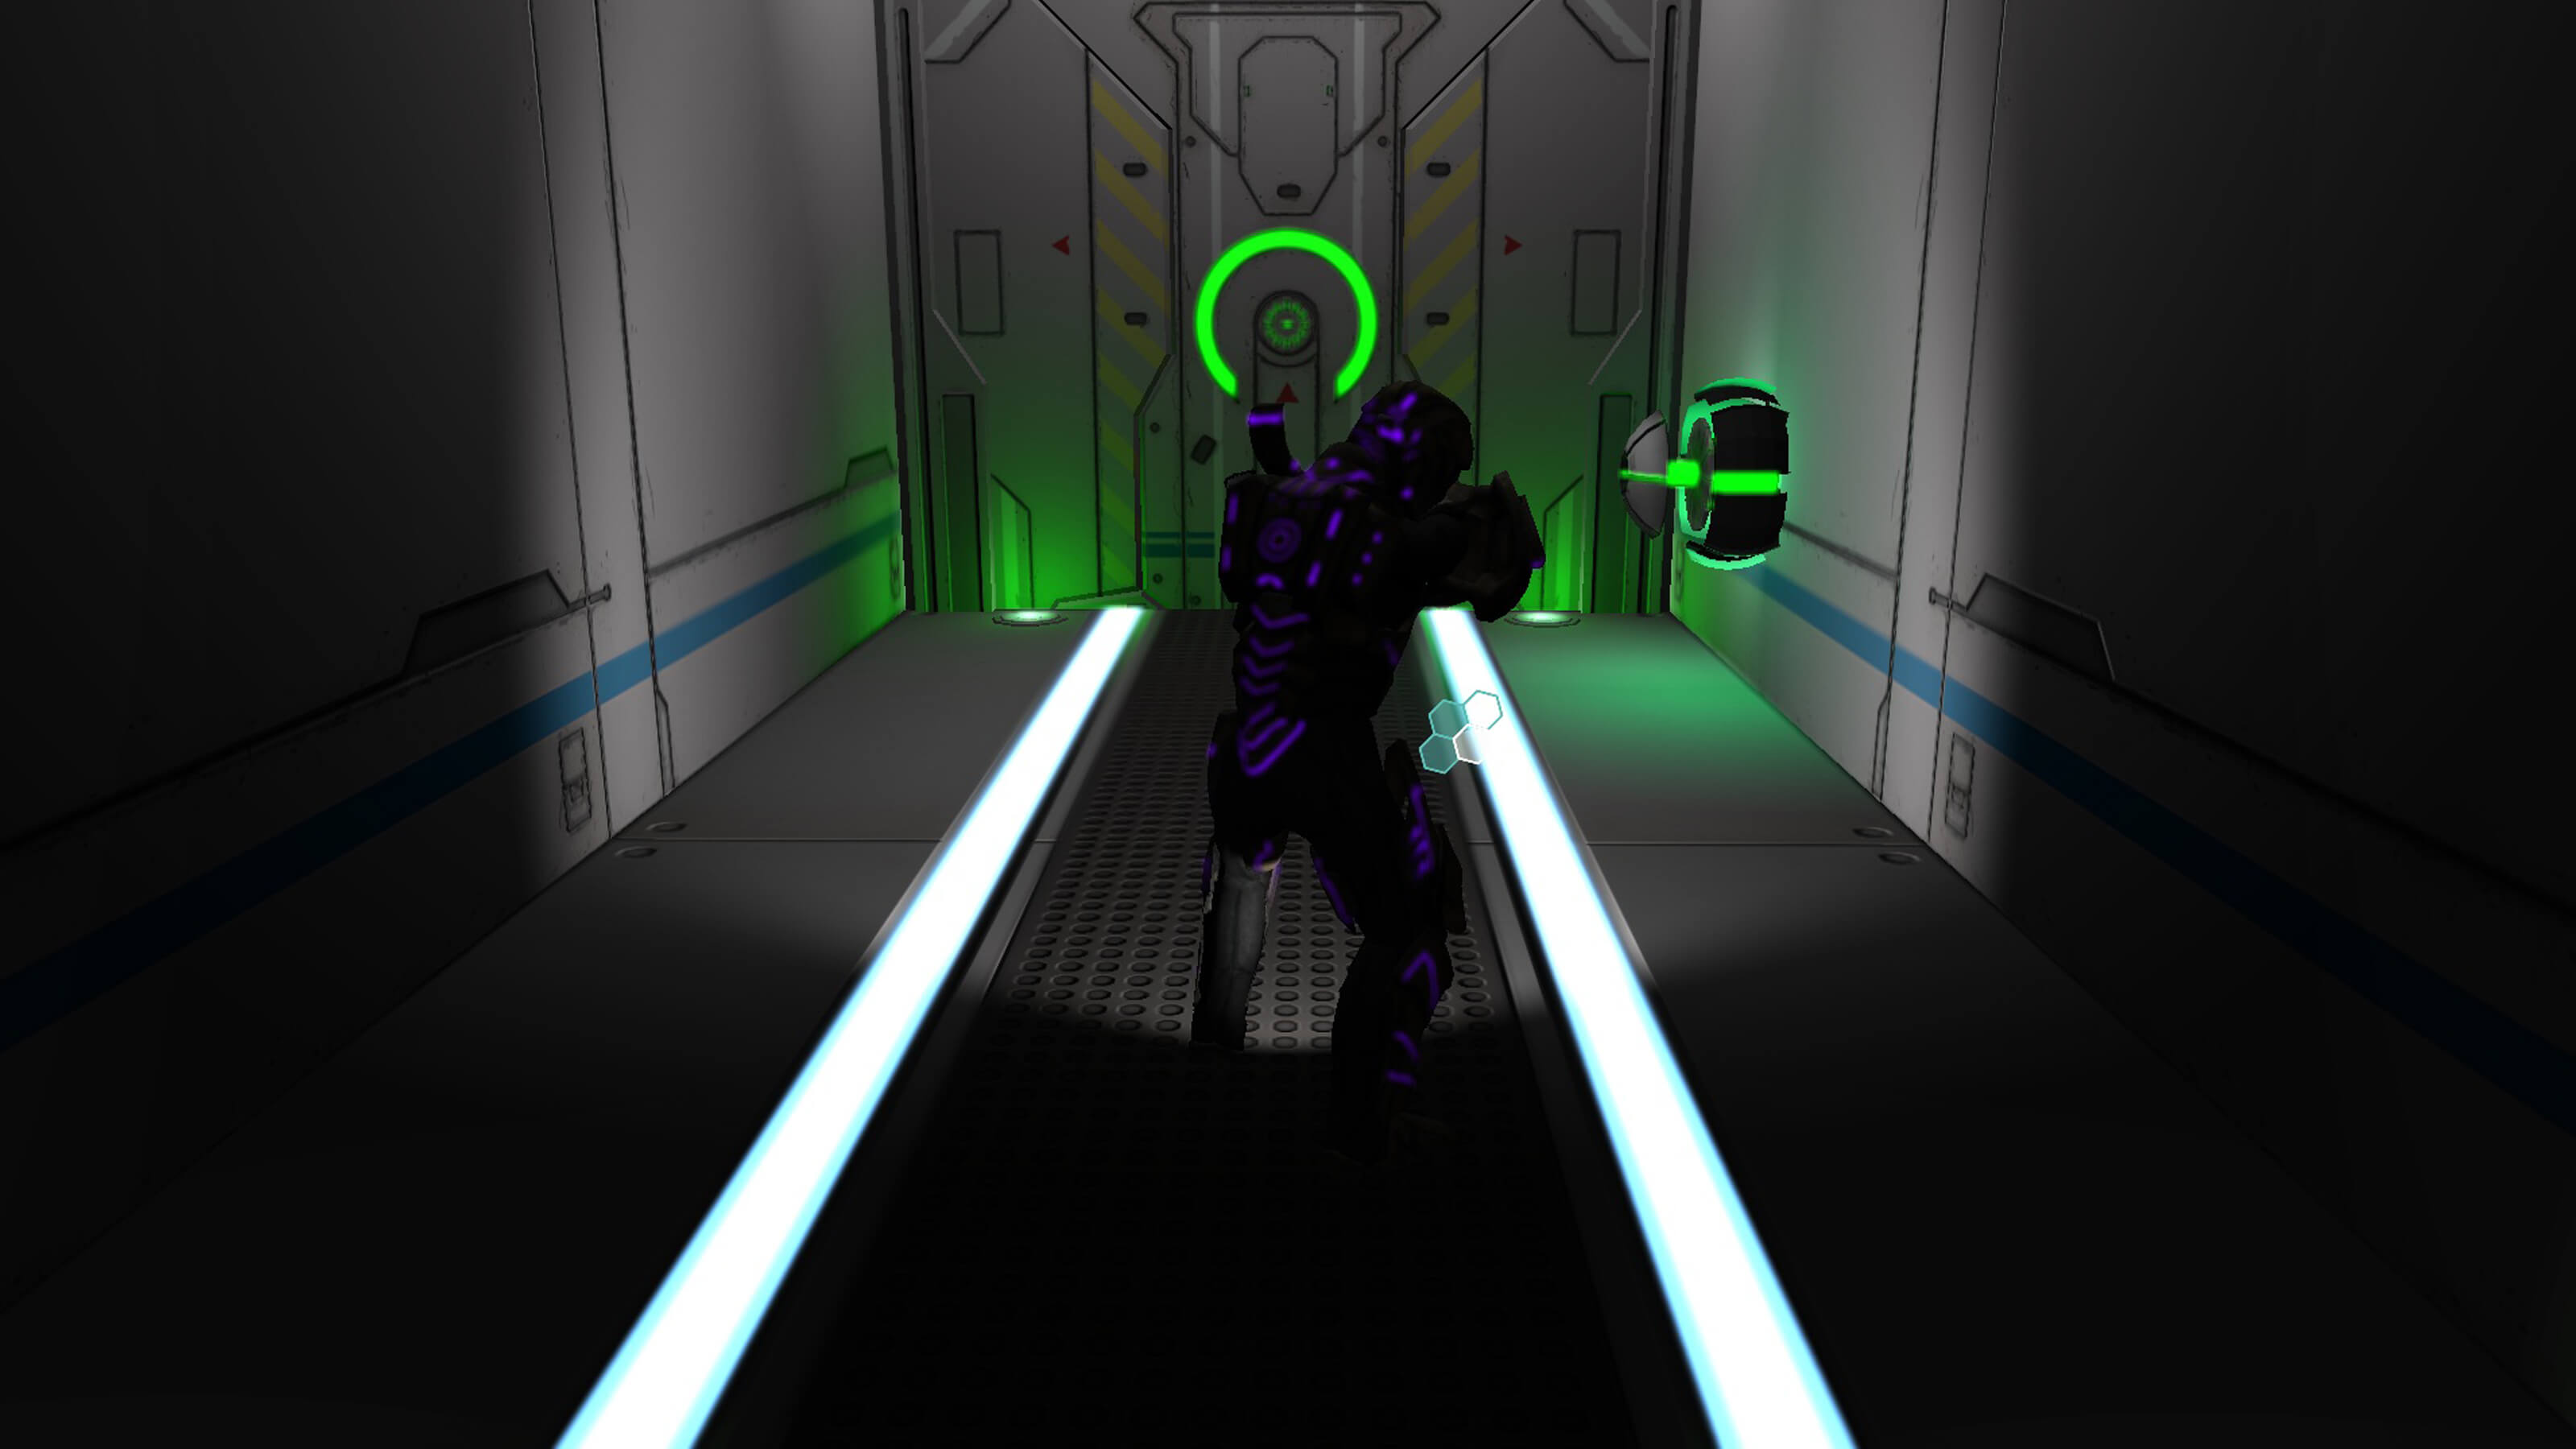 An alien impersonating a human soldier approaches a green blast door. 